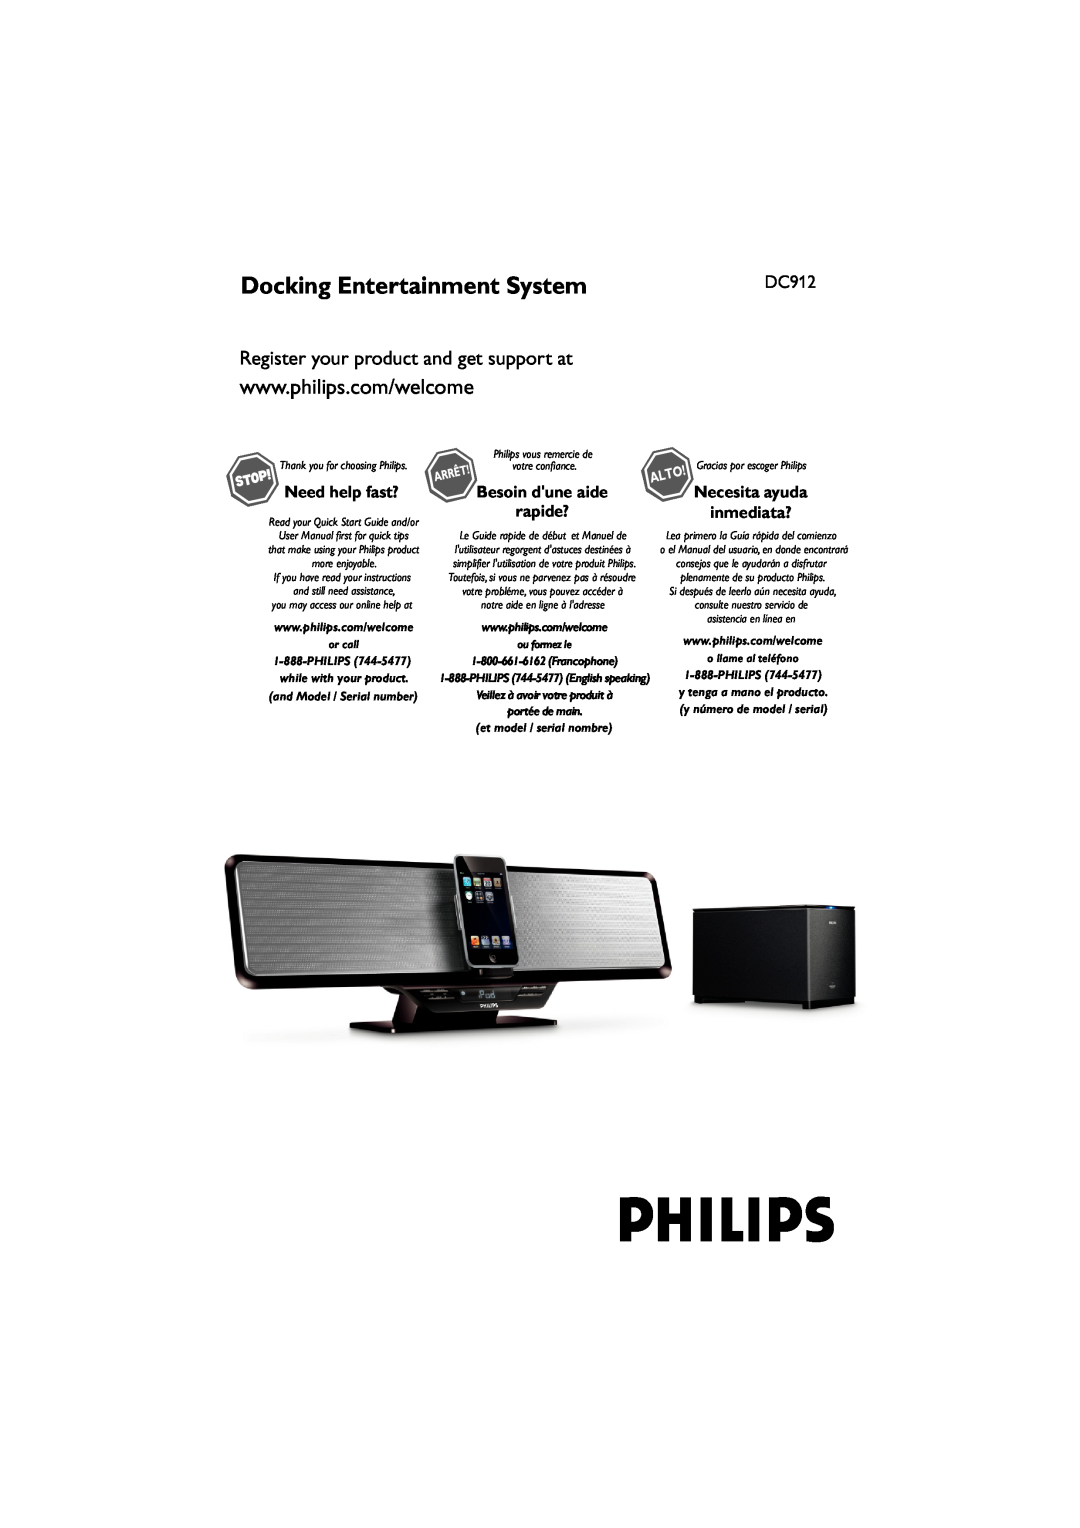 Philips DC912 quick start Necesita ayuda inmediata?, Docking Entertainment System, portée de main, ou formez le 